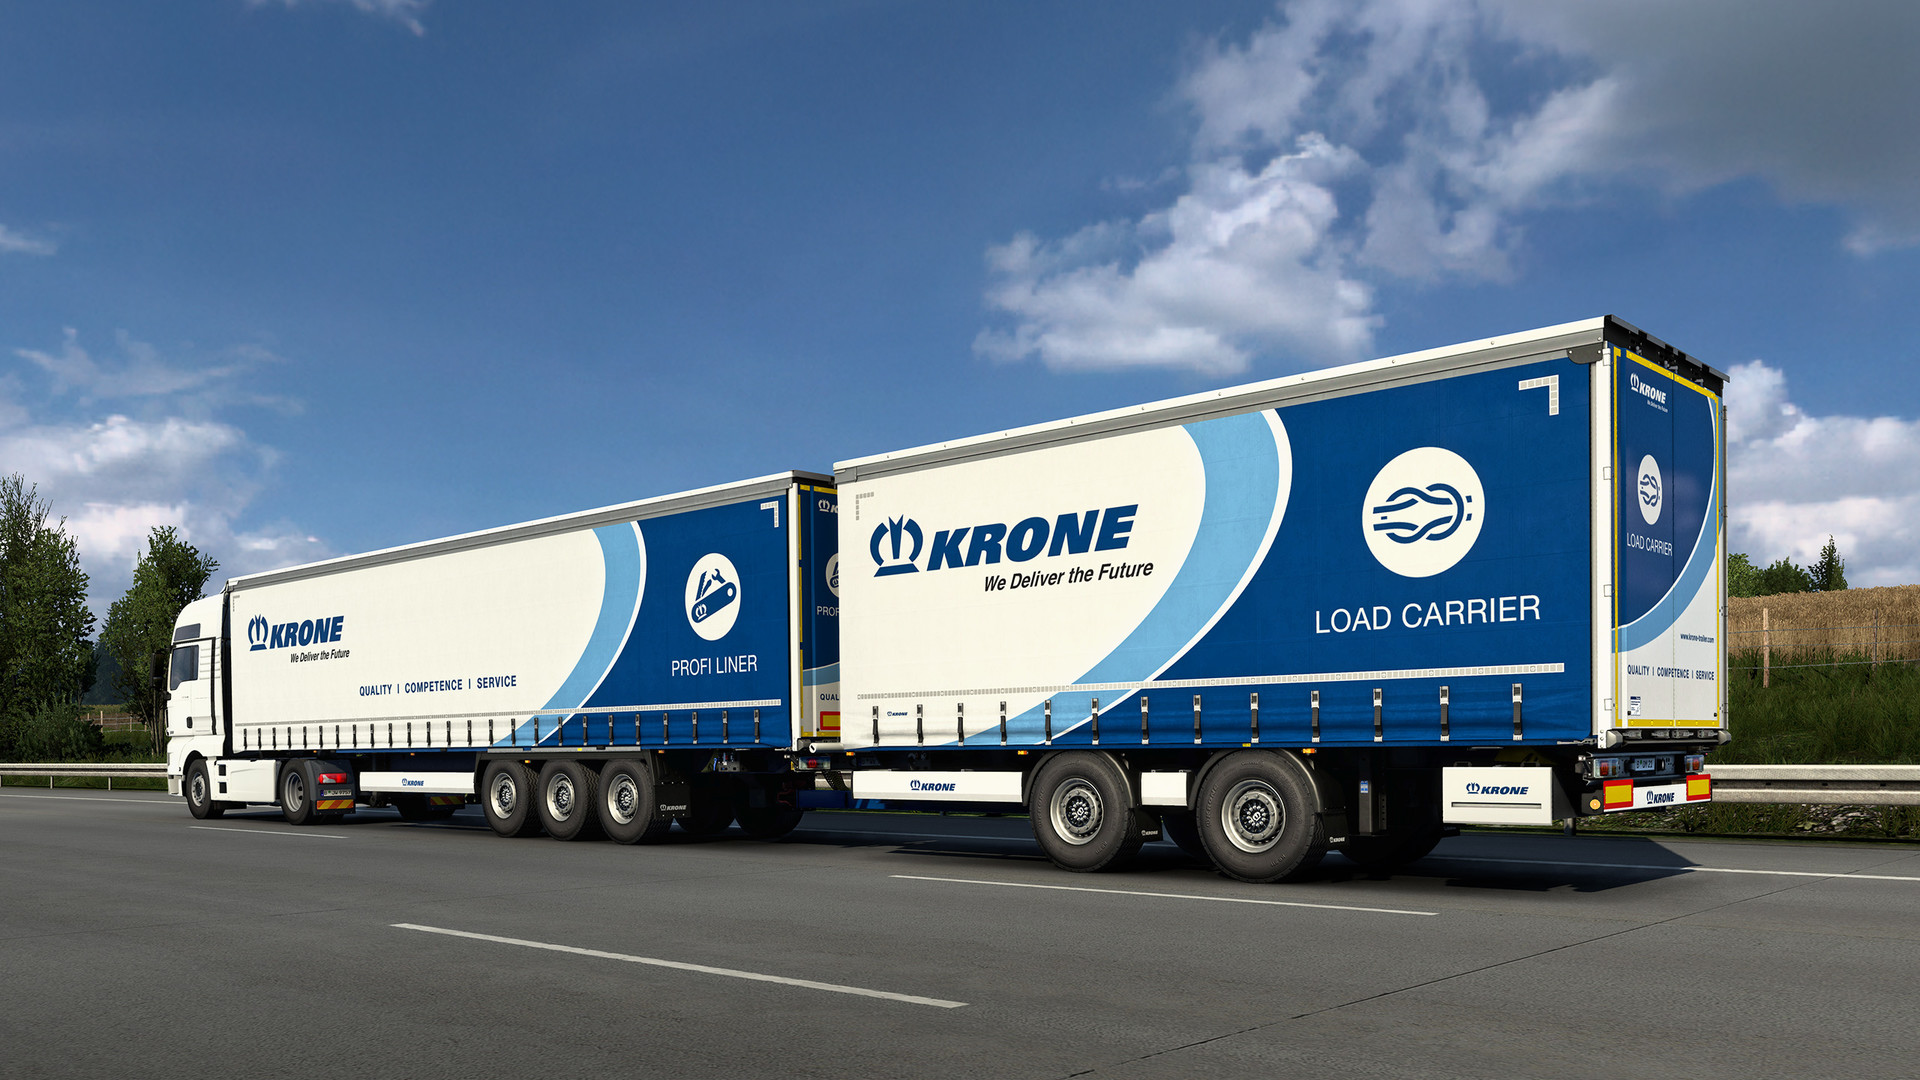 Save 50% on Euro Truck Simulator 2 - Krone Trailer Pack on Steam